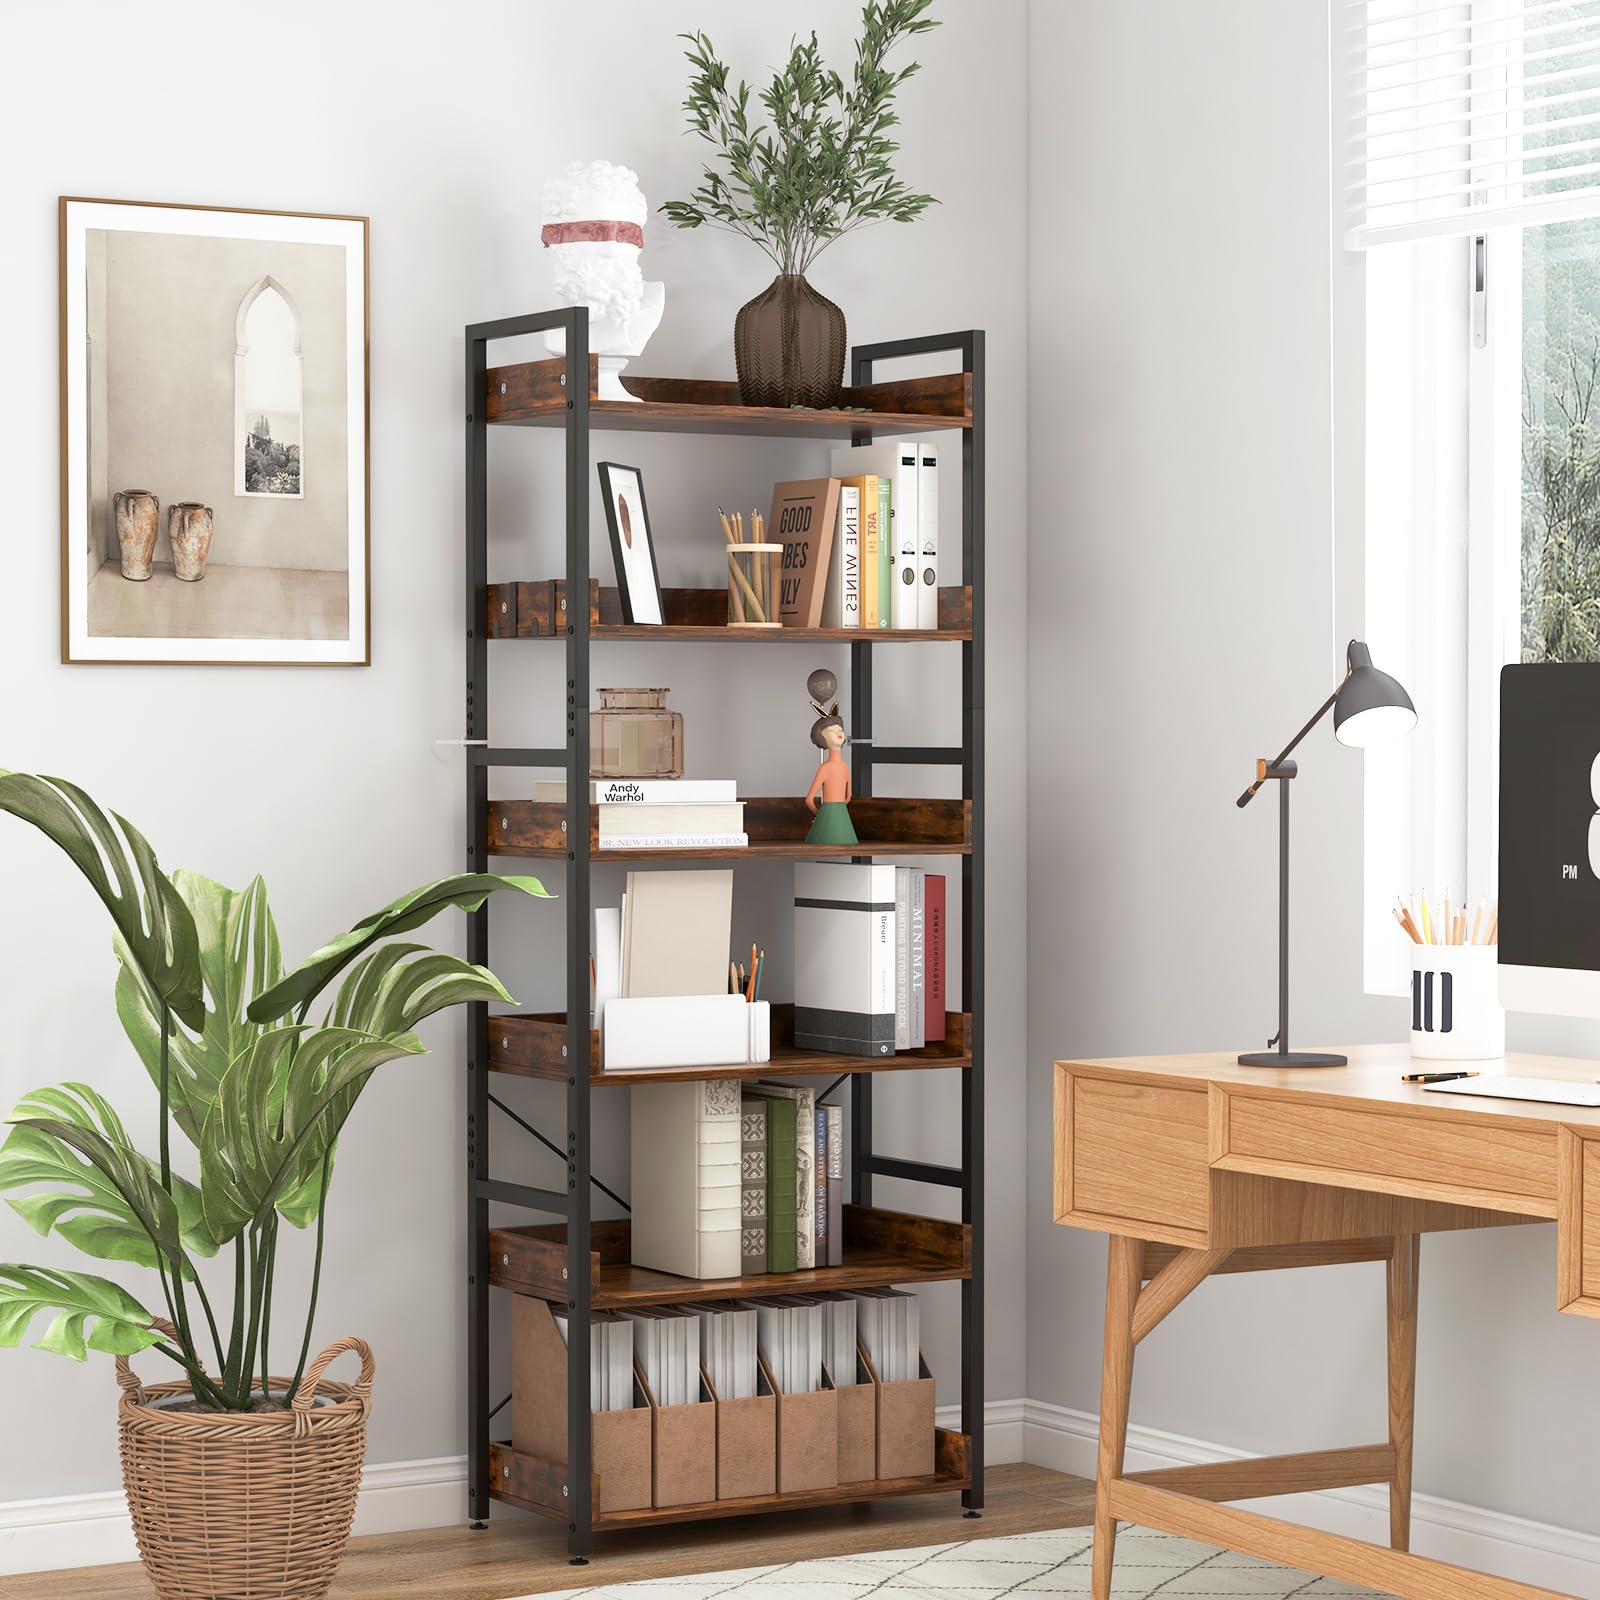 Giantex Industrial 6-Tier Bookshelf, 70" Tall Freestanding Storage Display Shelf with 4 Hooks